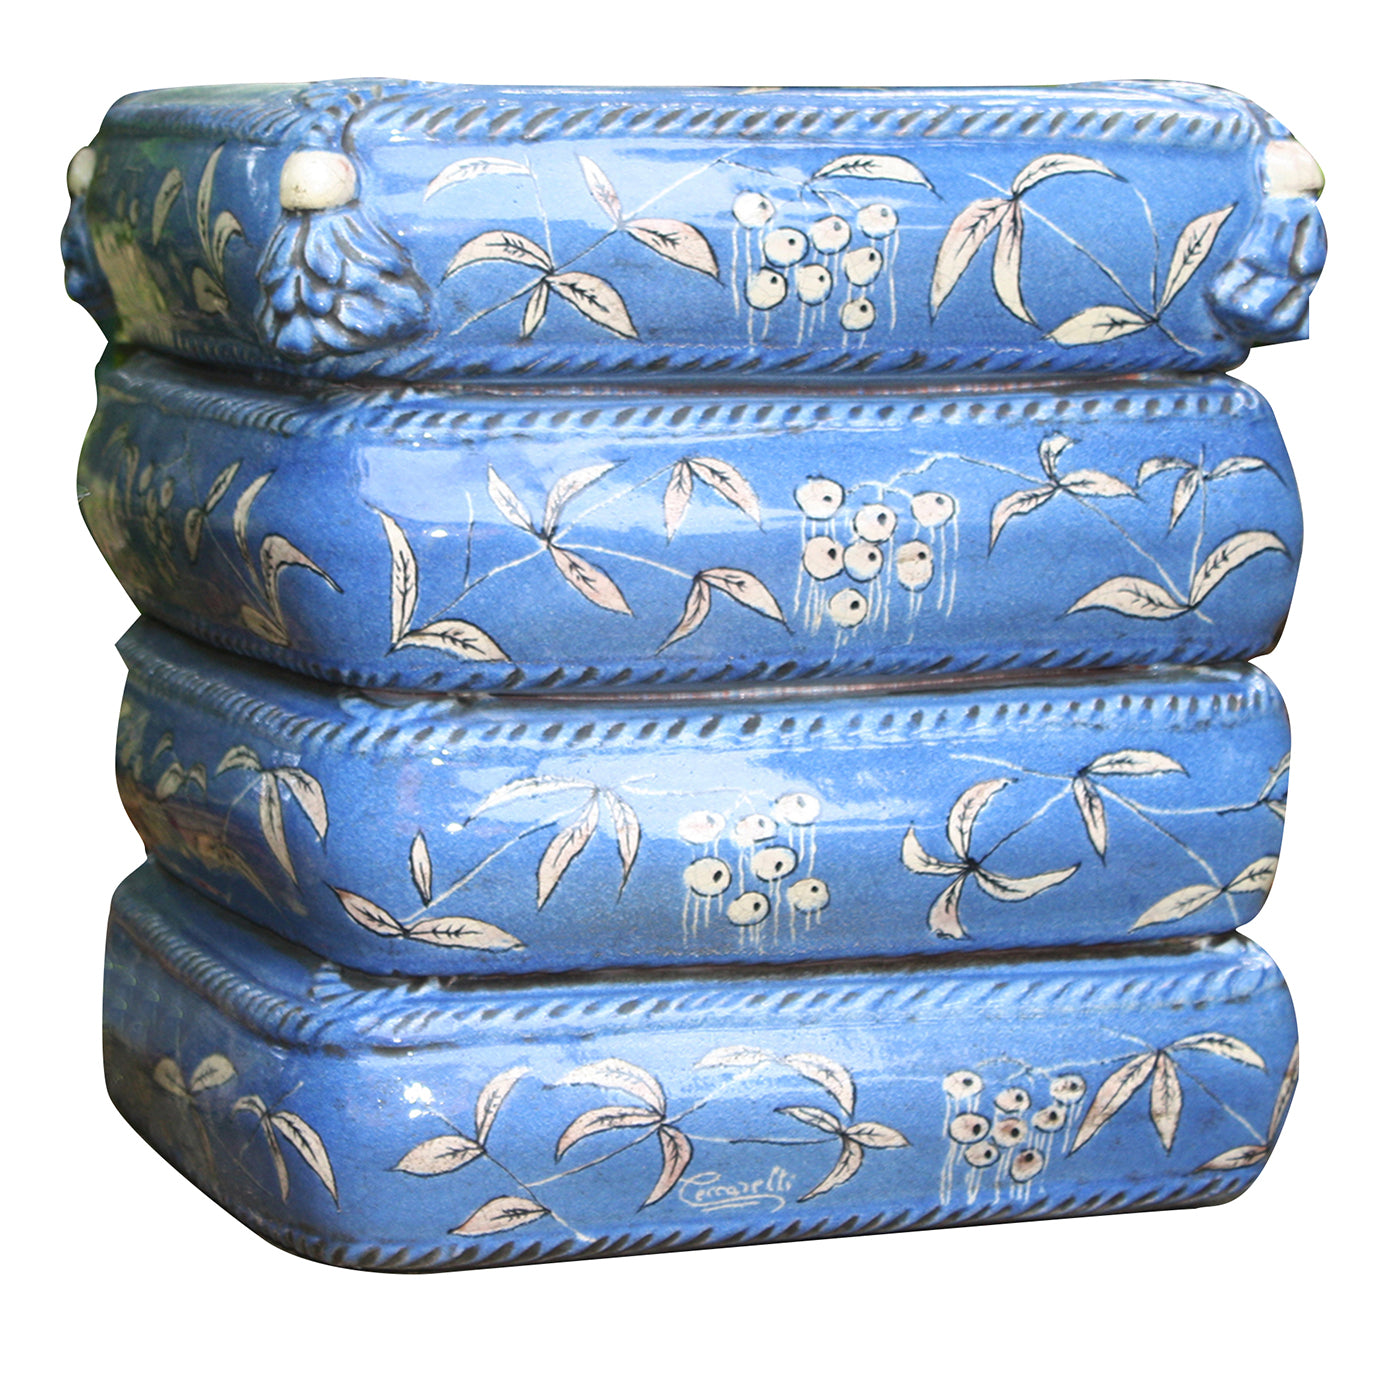 Puf de cerámica azul de 4 cojines - Vista principal